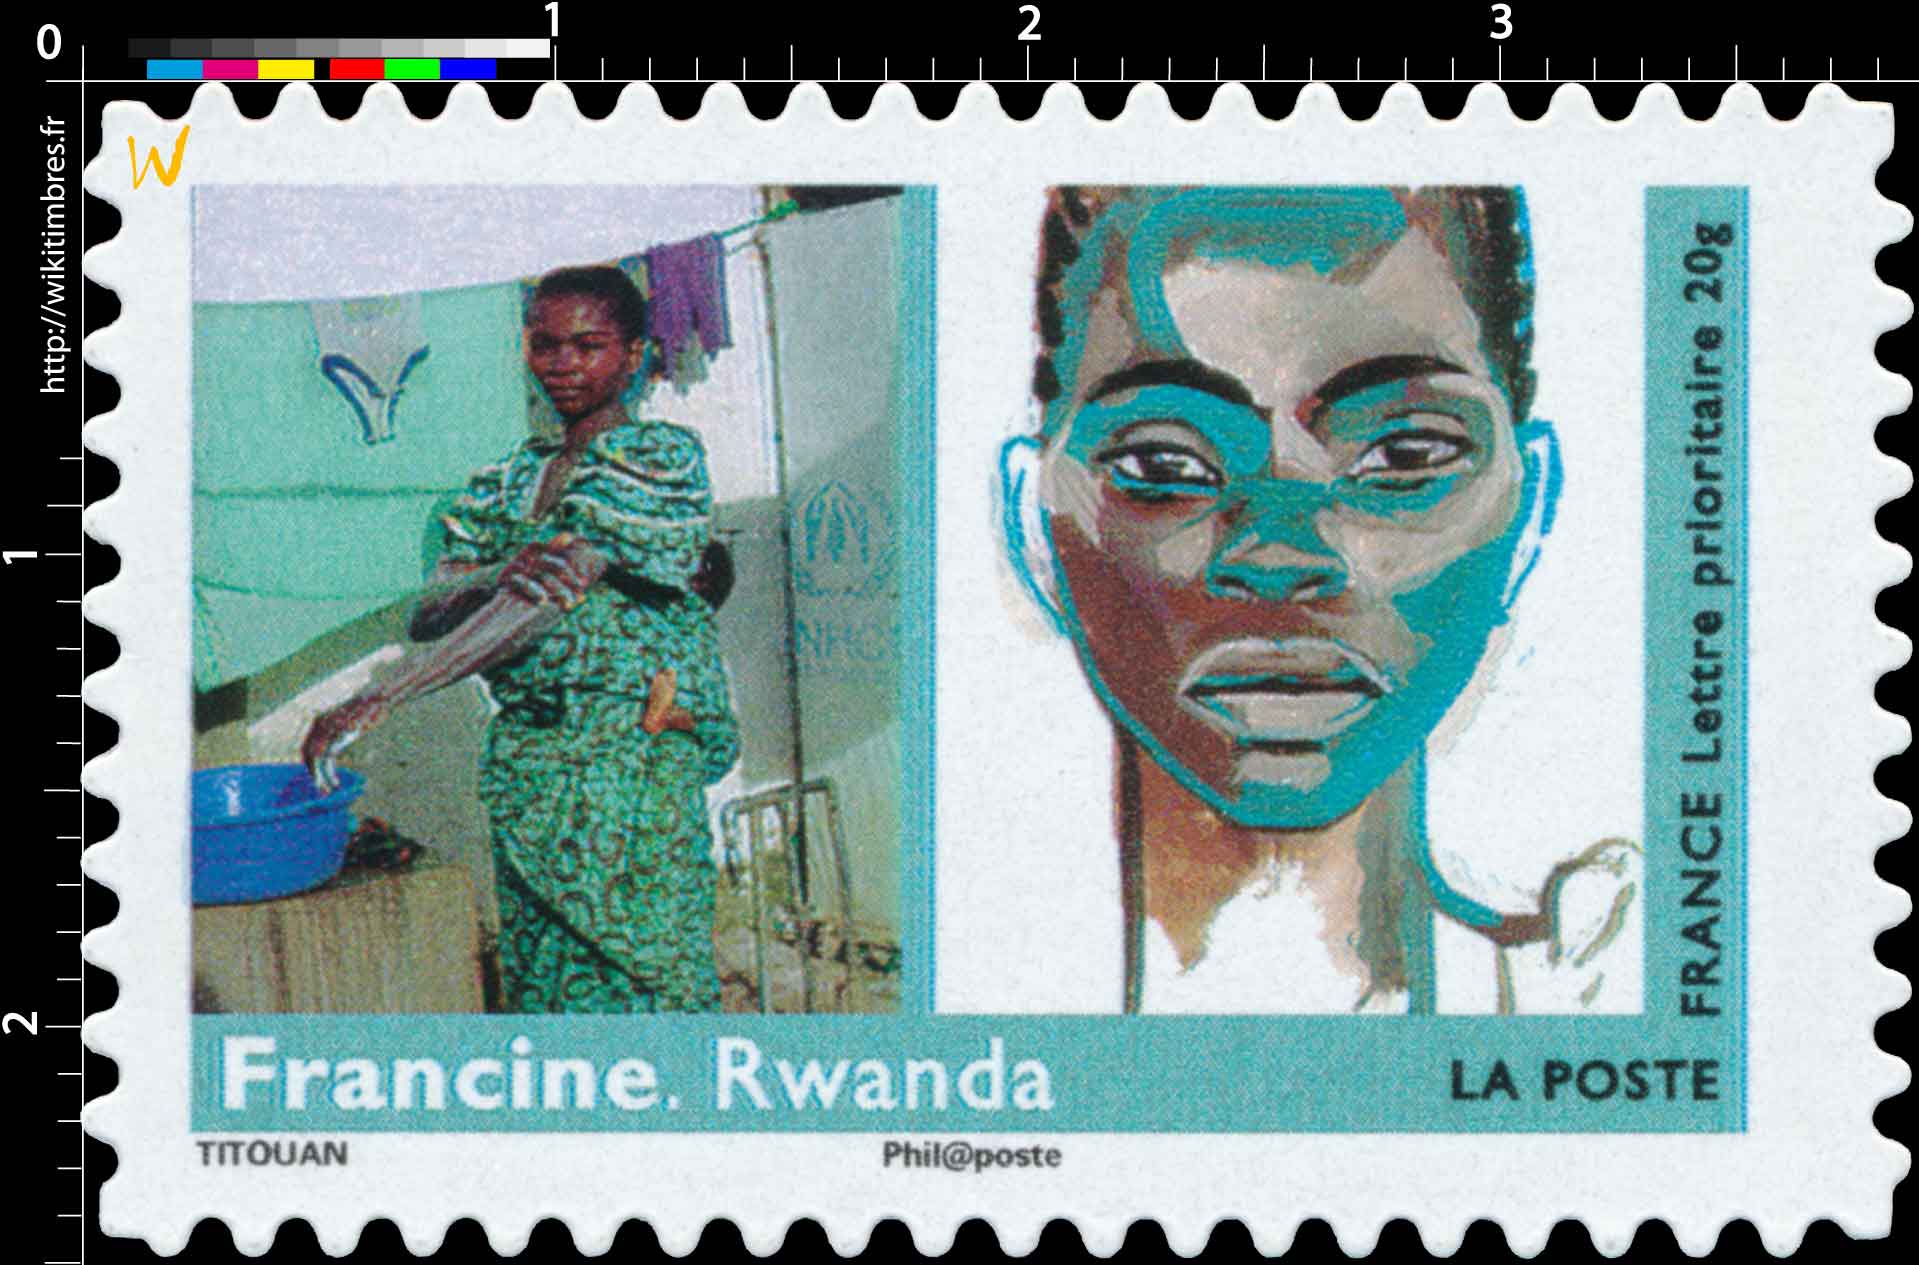 Francine Rwanda